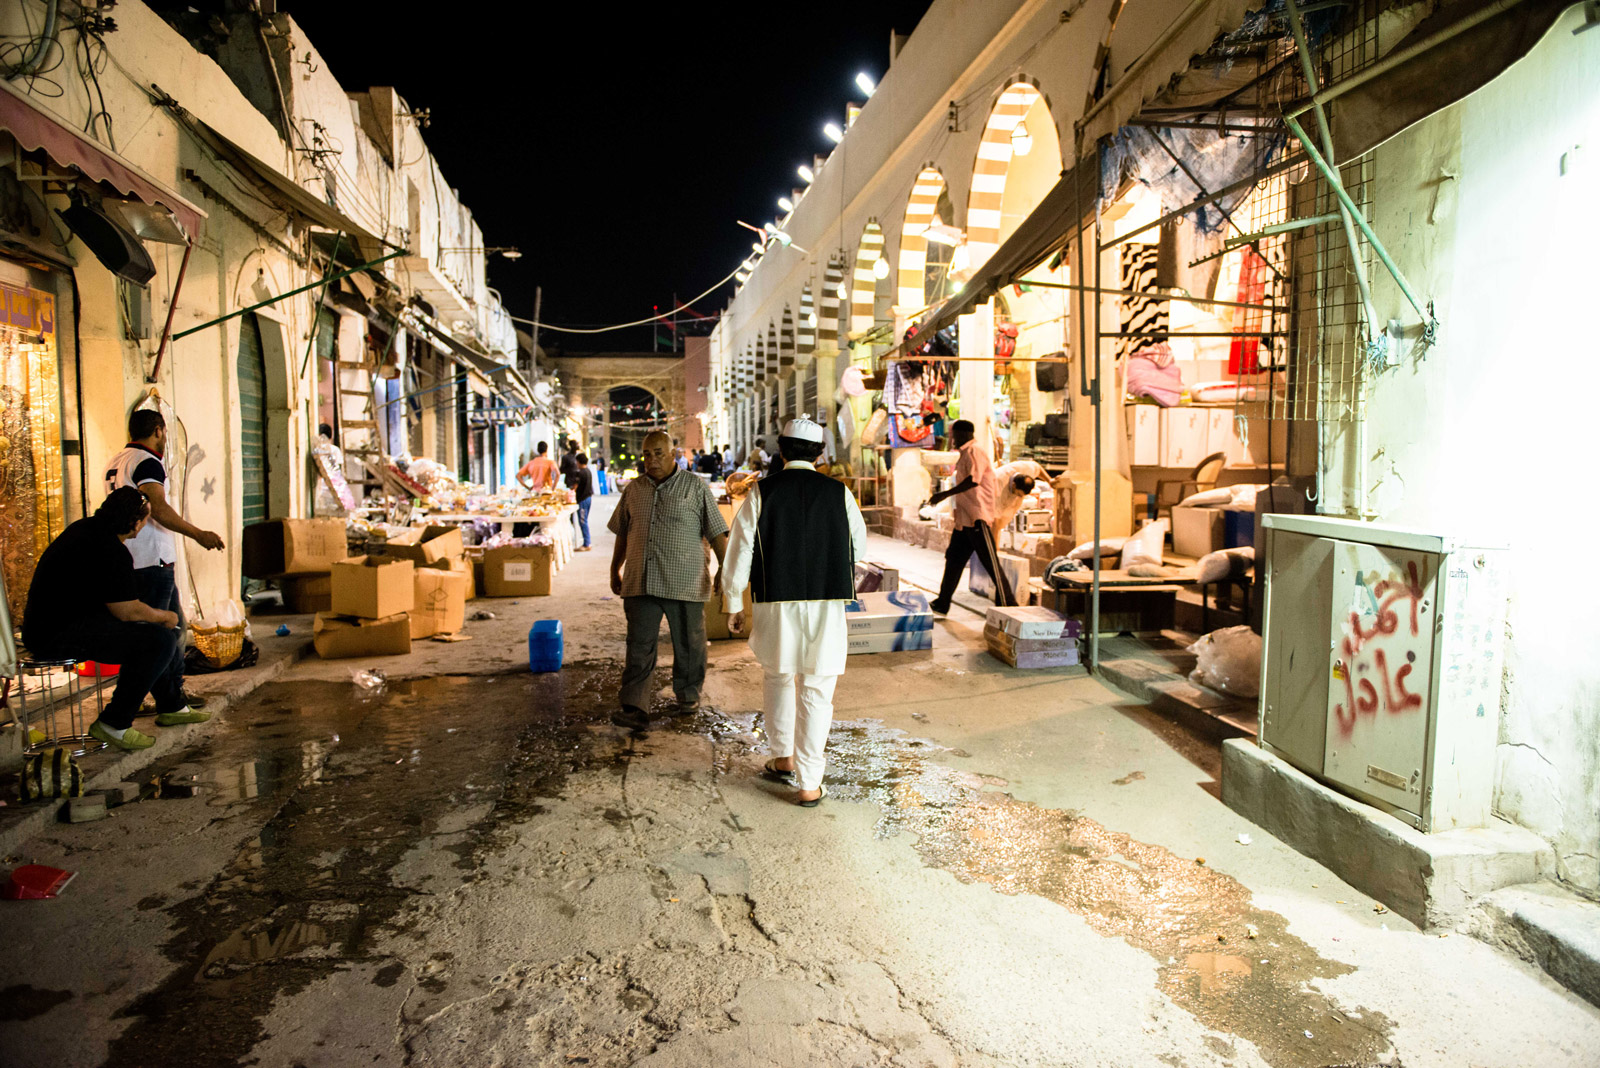 Abubaker walking through Tripoli's old town. 